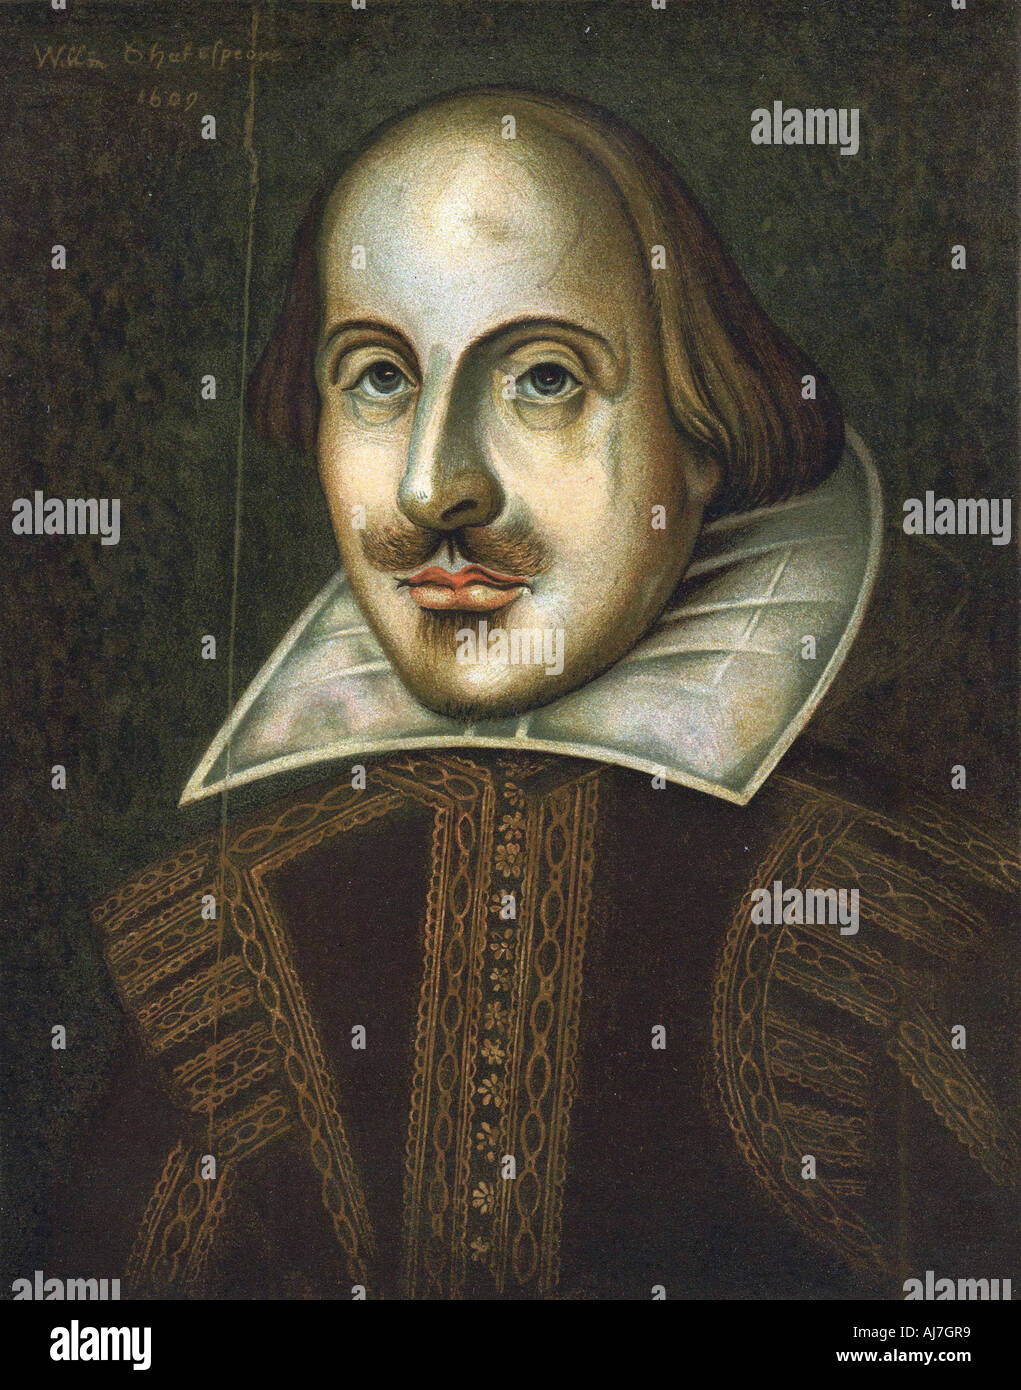 William Shakespeare, dramaturge anglais, 1609. Artiste : Inconnu Banque D'Images